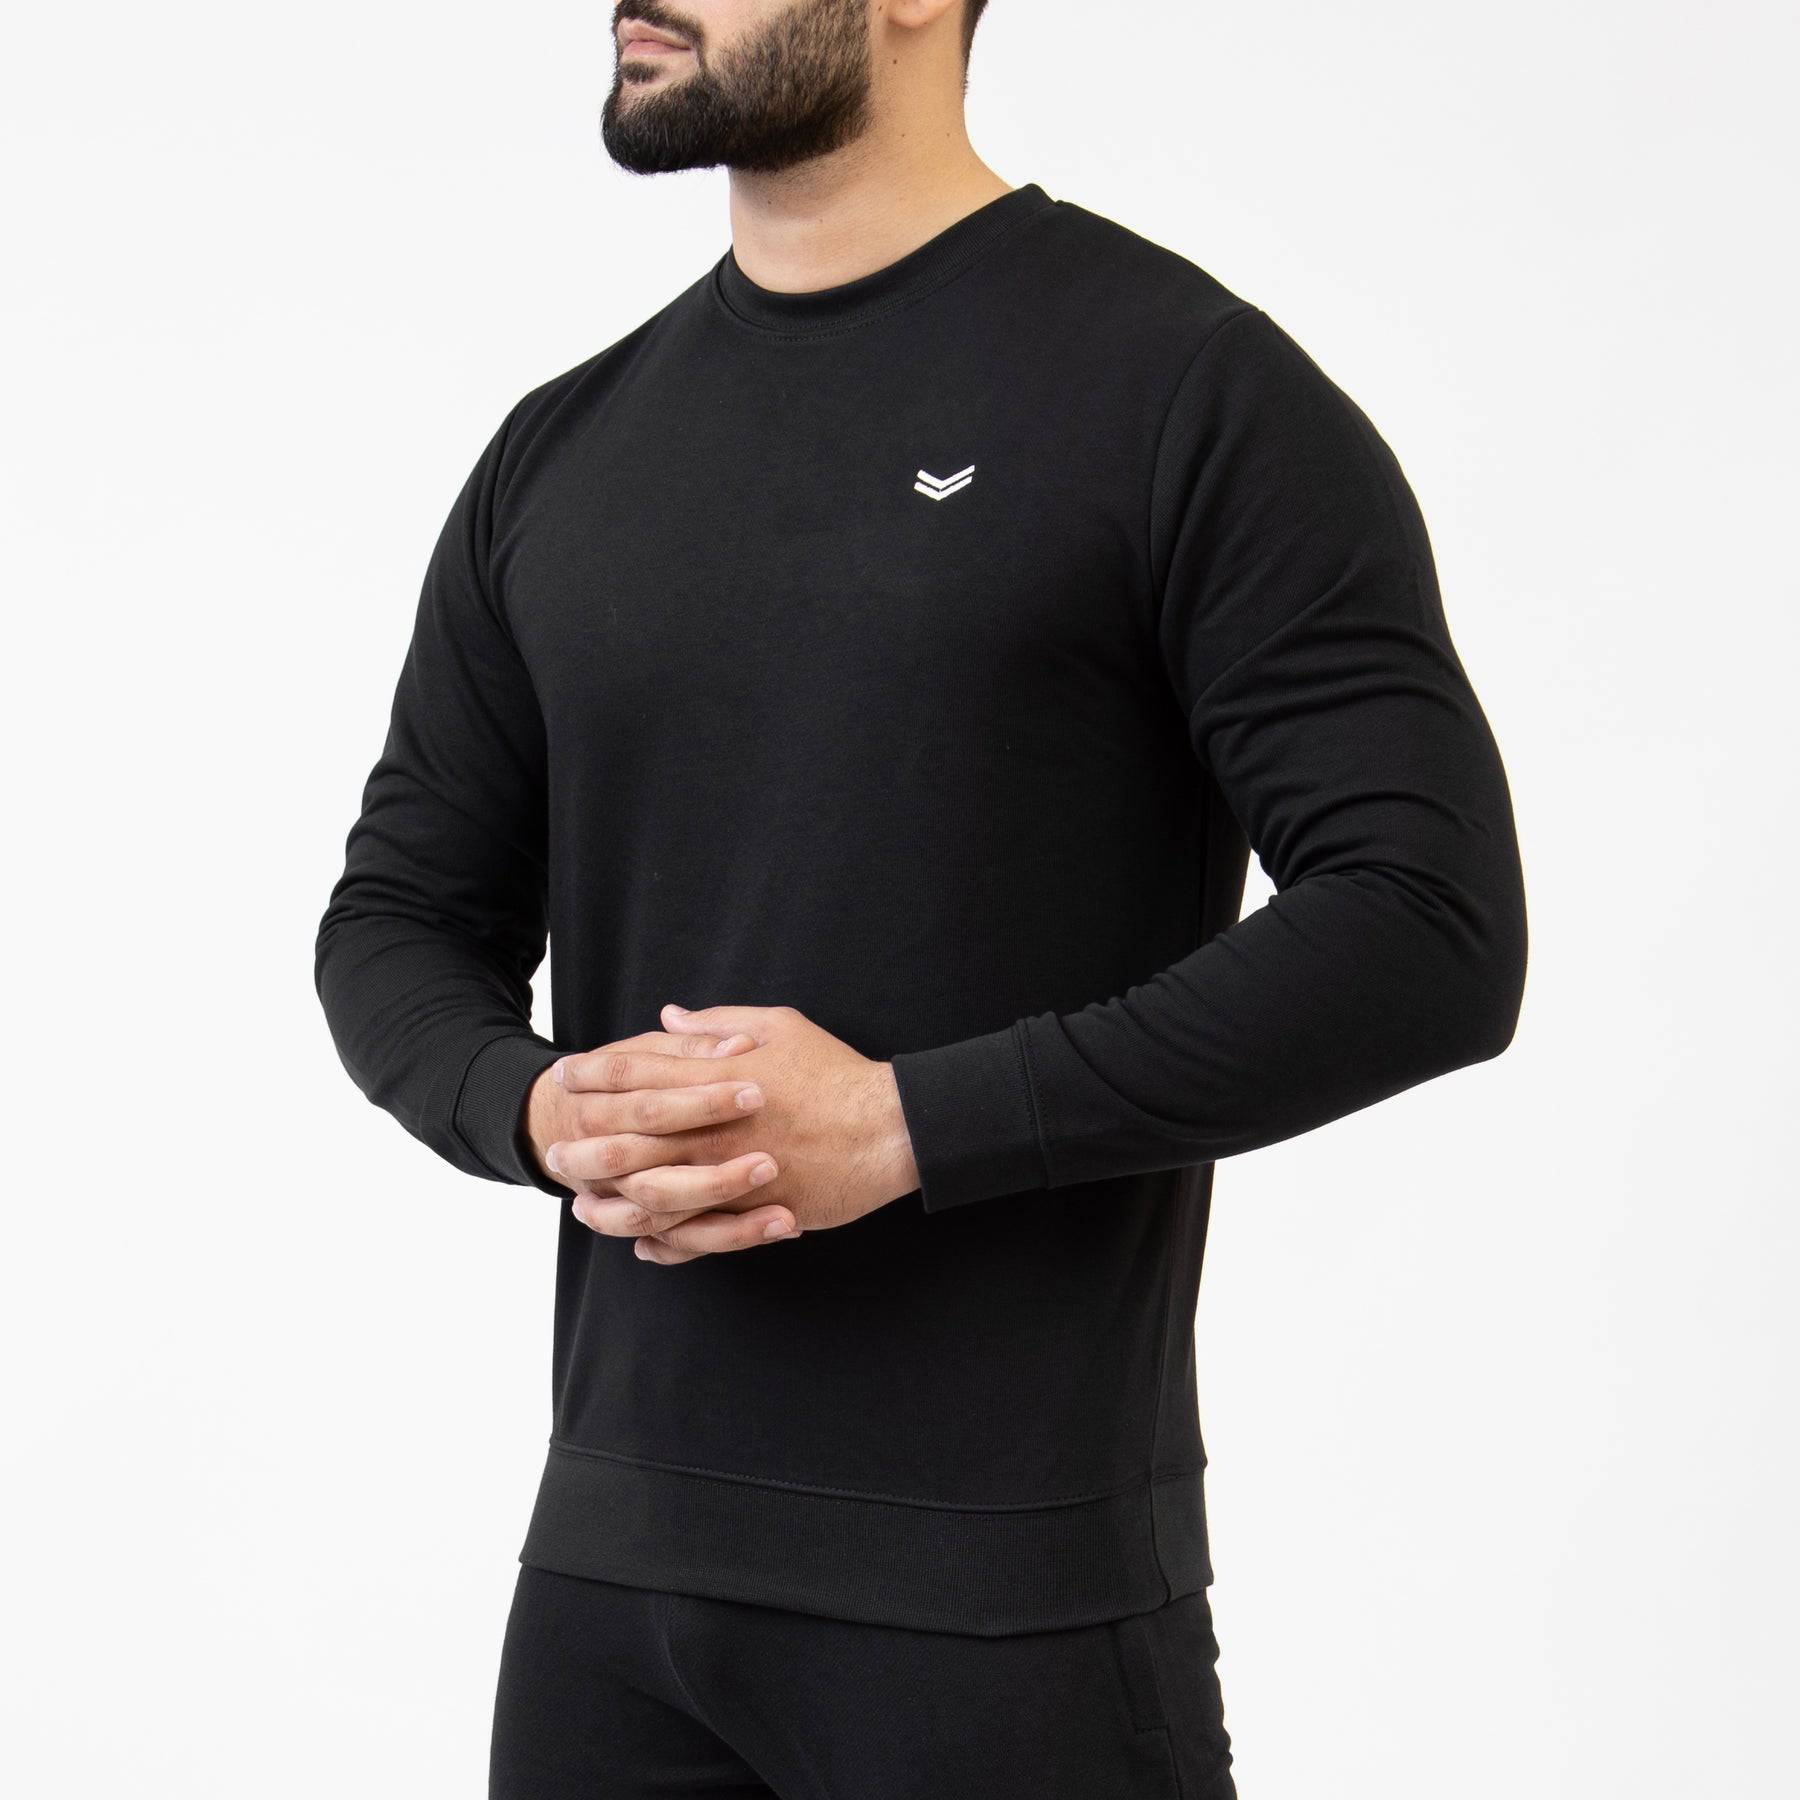 Solid Black Sweatshirt - Valetica Sports